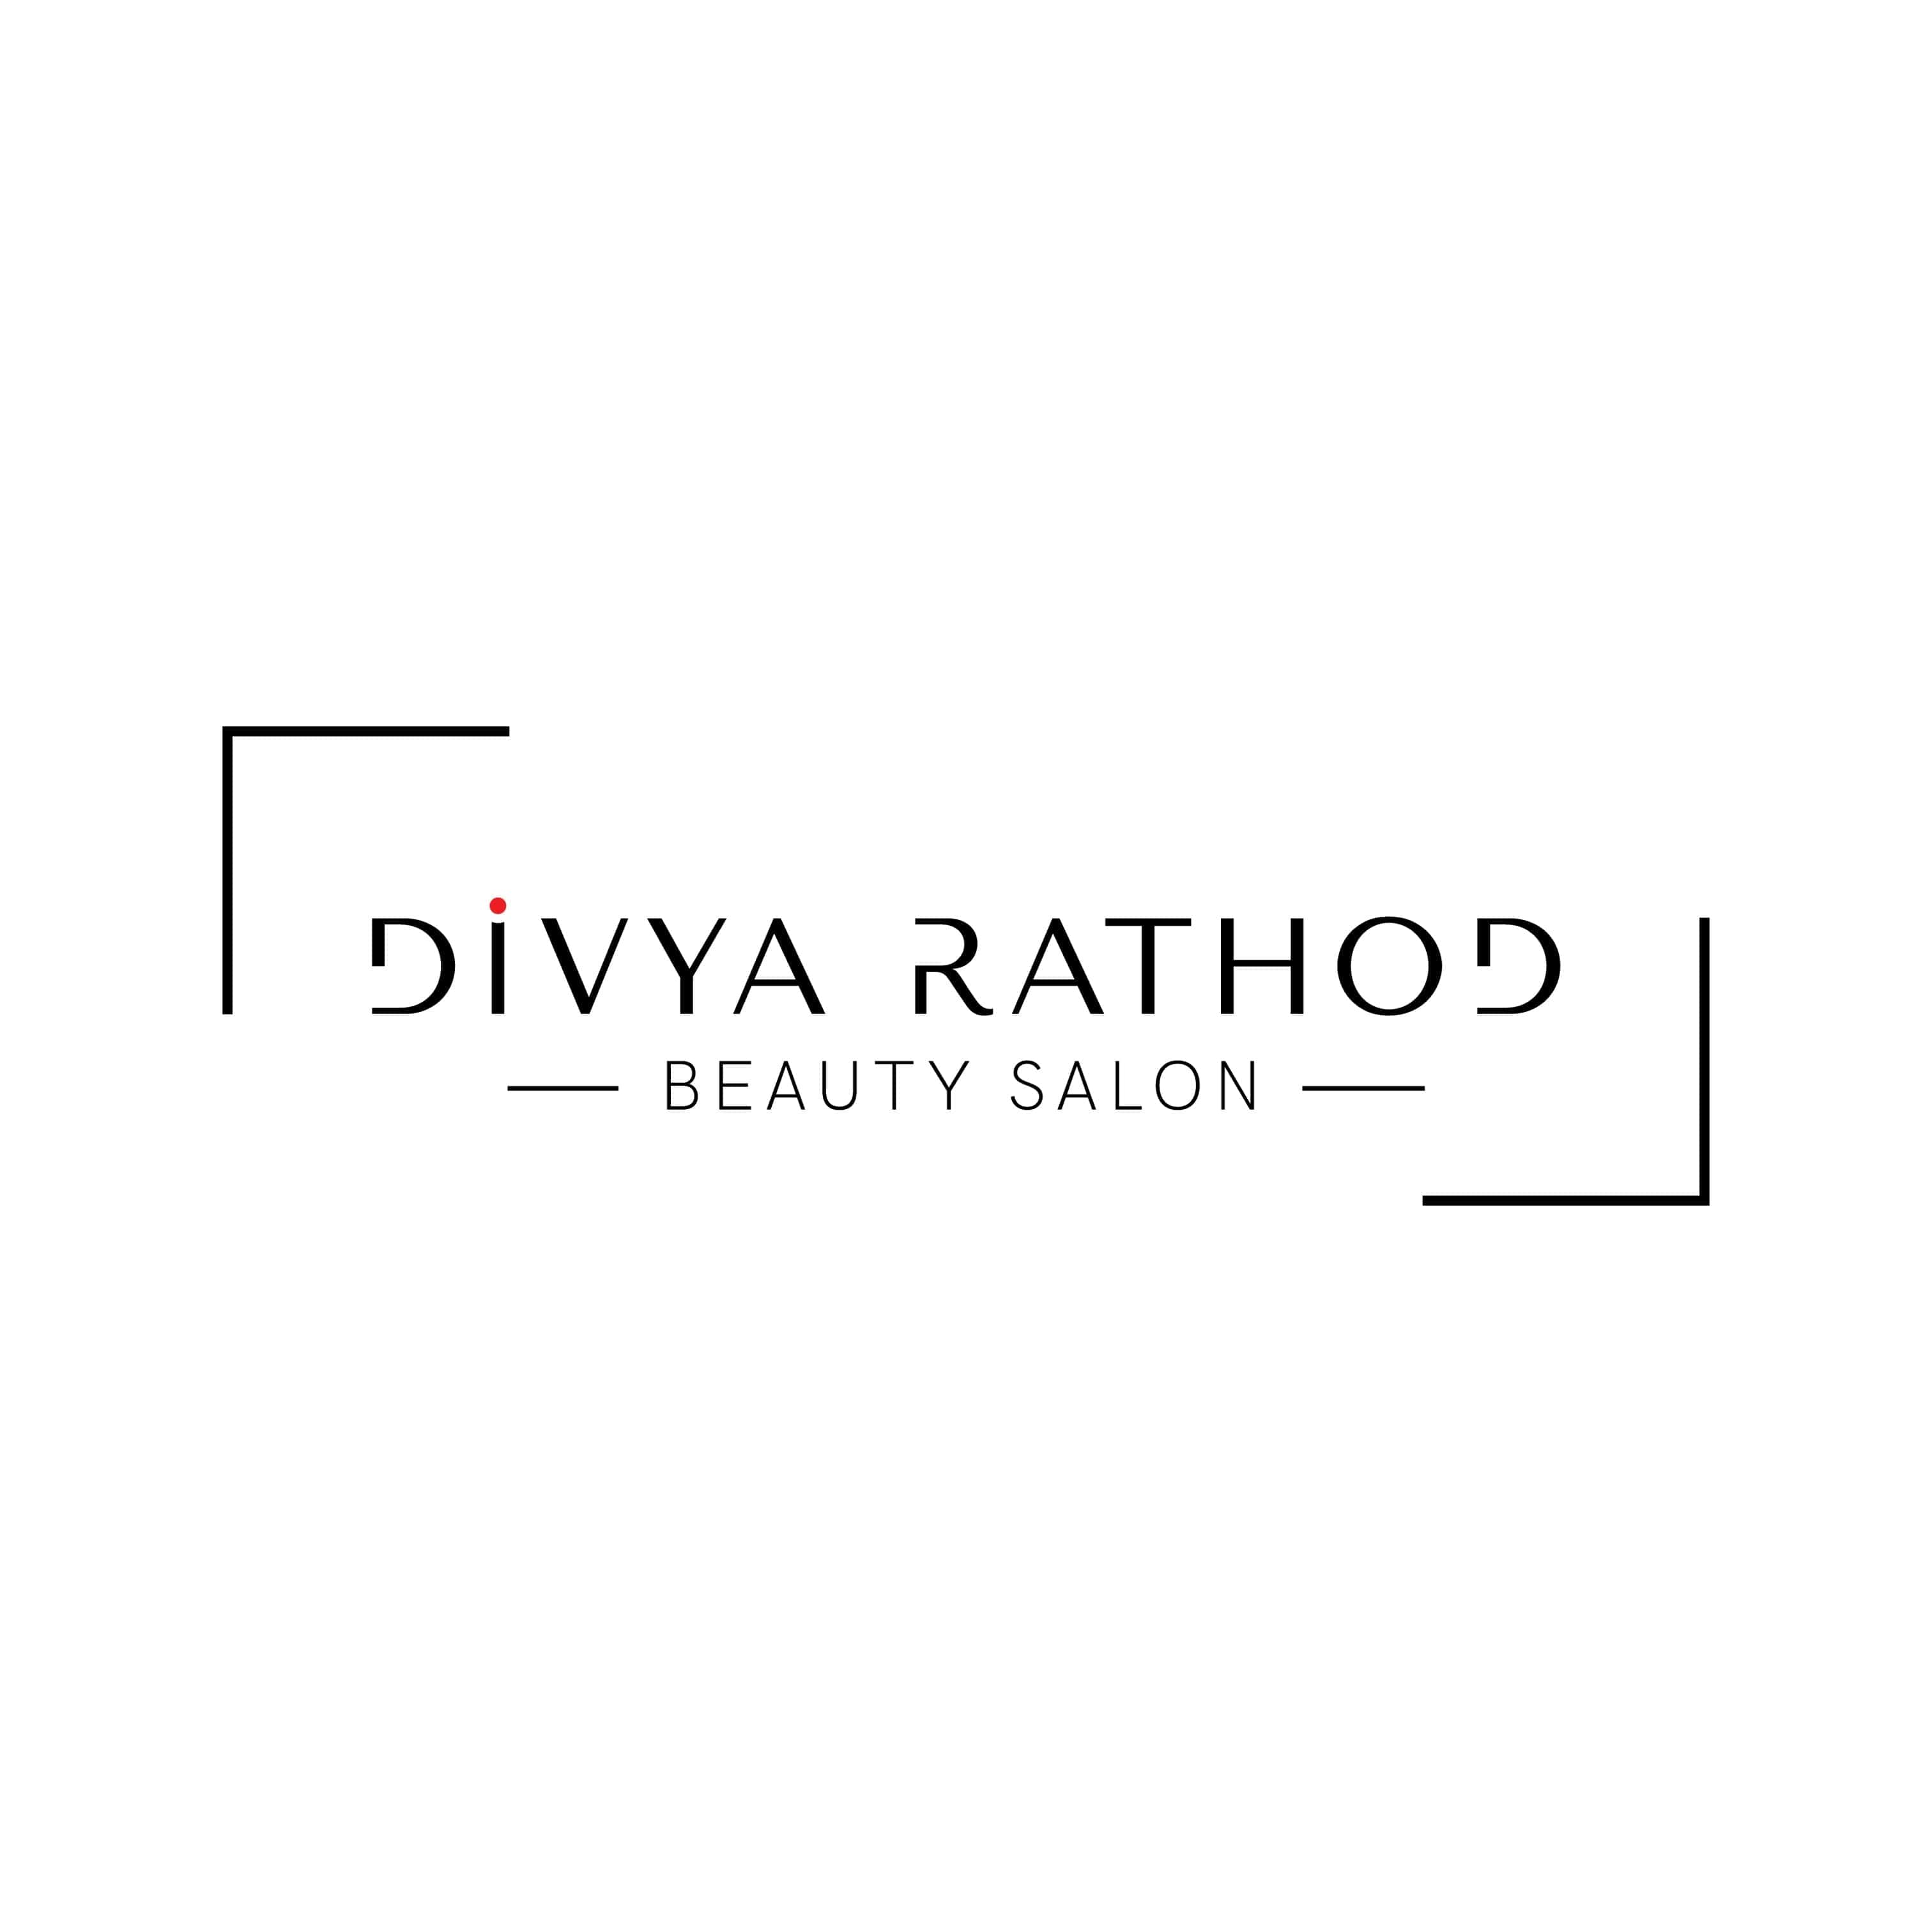 Divya Rathod Beauty Salon - Near Vaishnodevi Circle